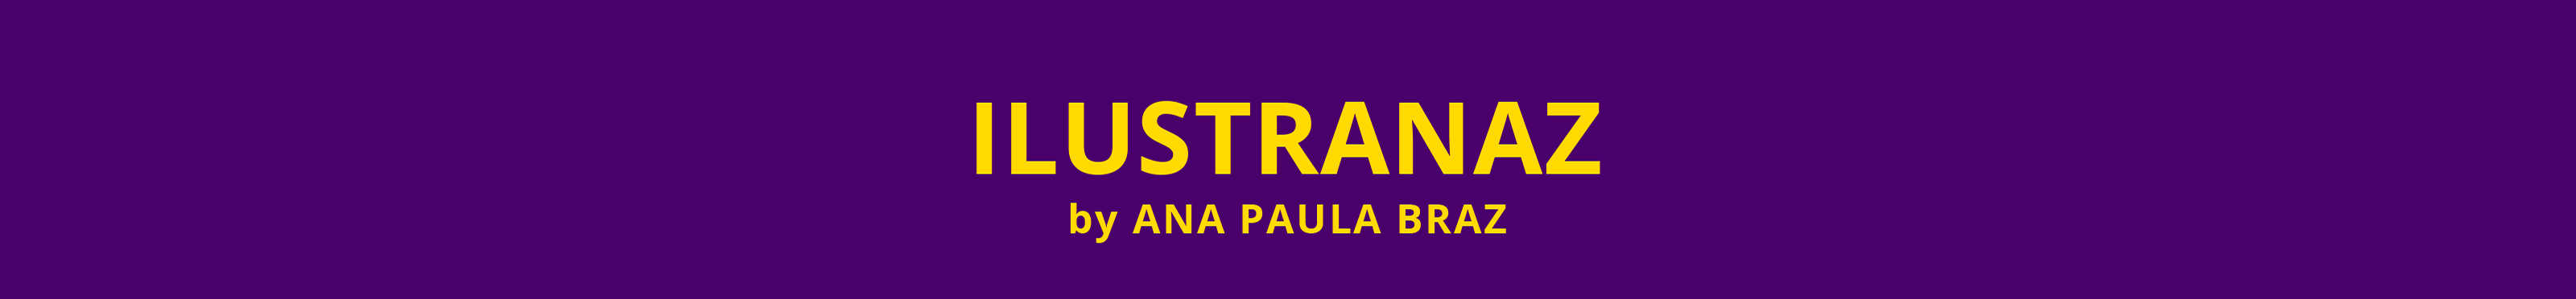 Banner de perfil de Ana Paula Braz